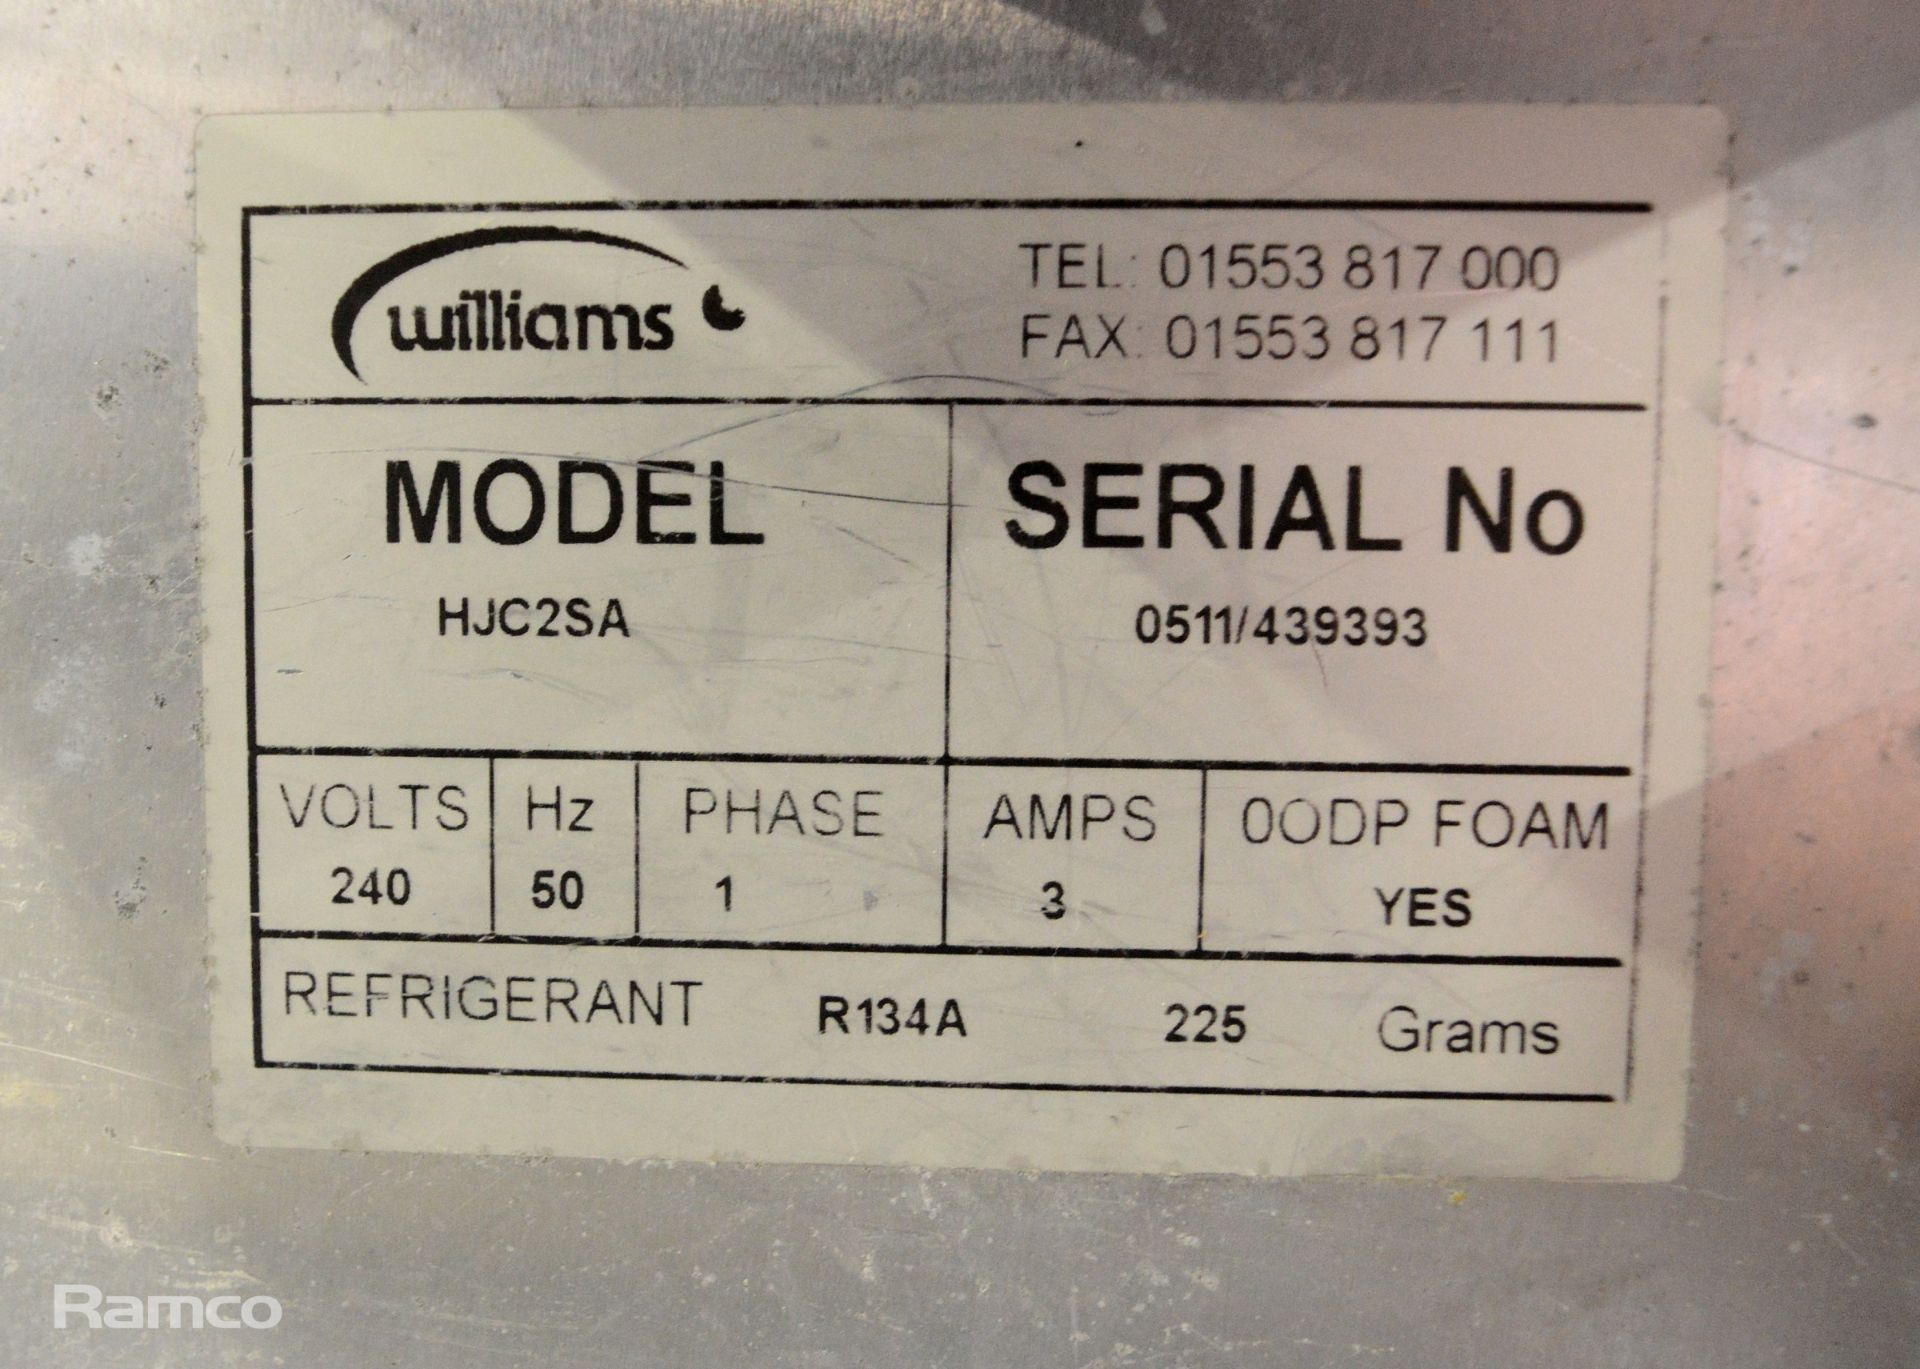 Williams HJC2SA counter fridge - 67x140x87cm - Image 4 of 6